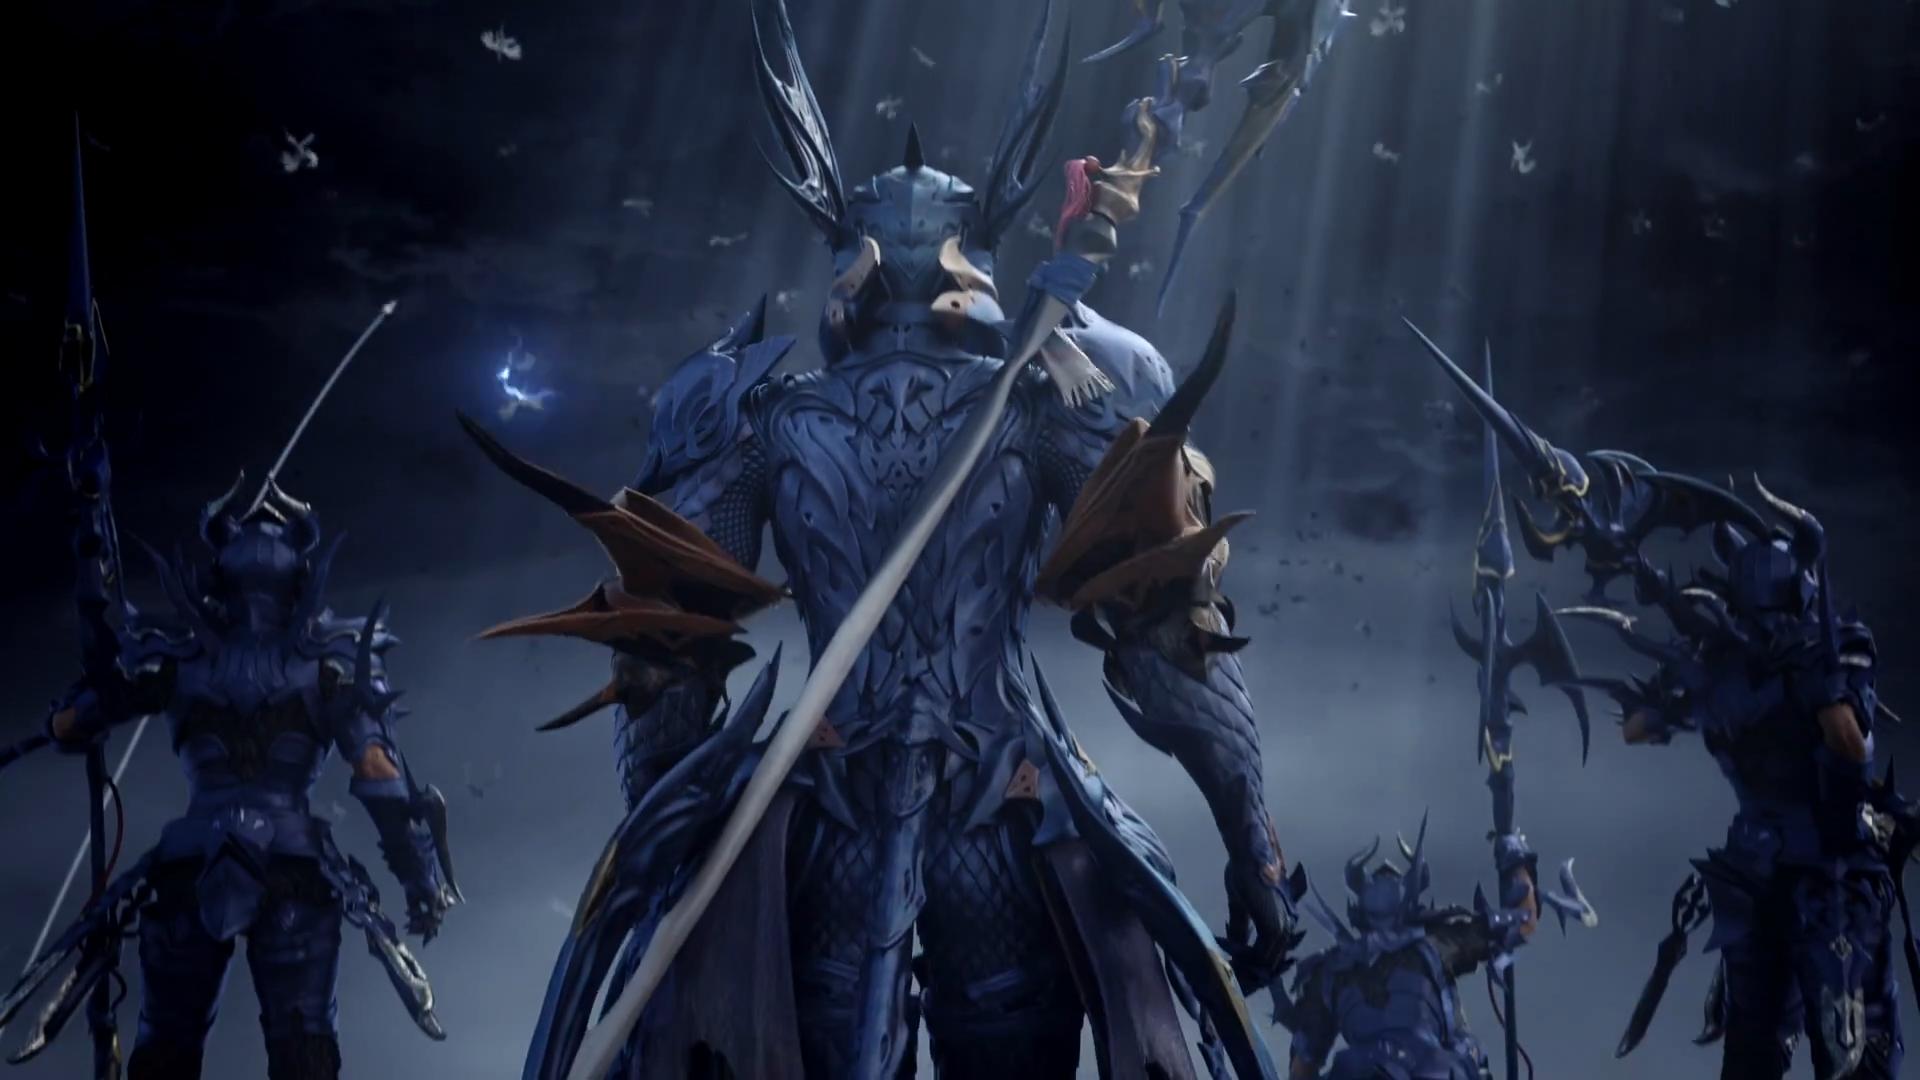 Final Fantasy Xiv Heavensward Announced First Major Expansion Due Out In Spring 15 Nova Crystallis